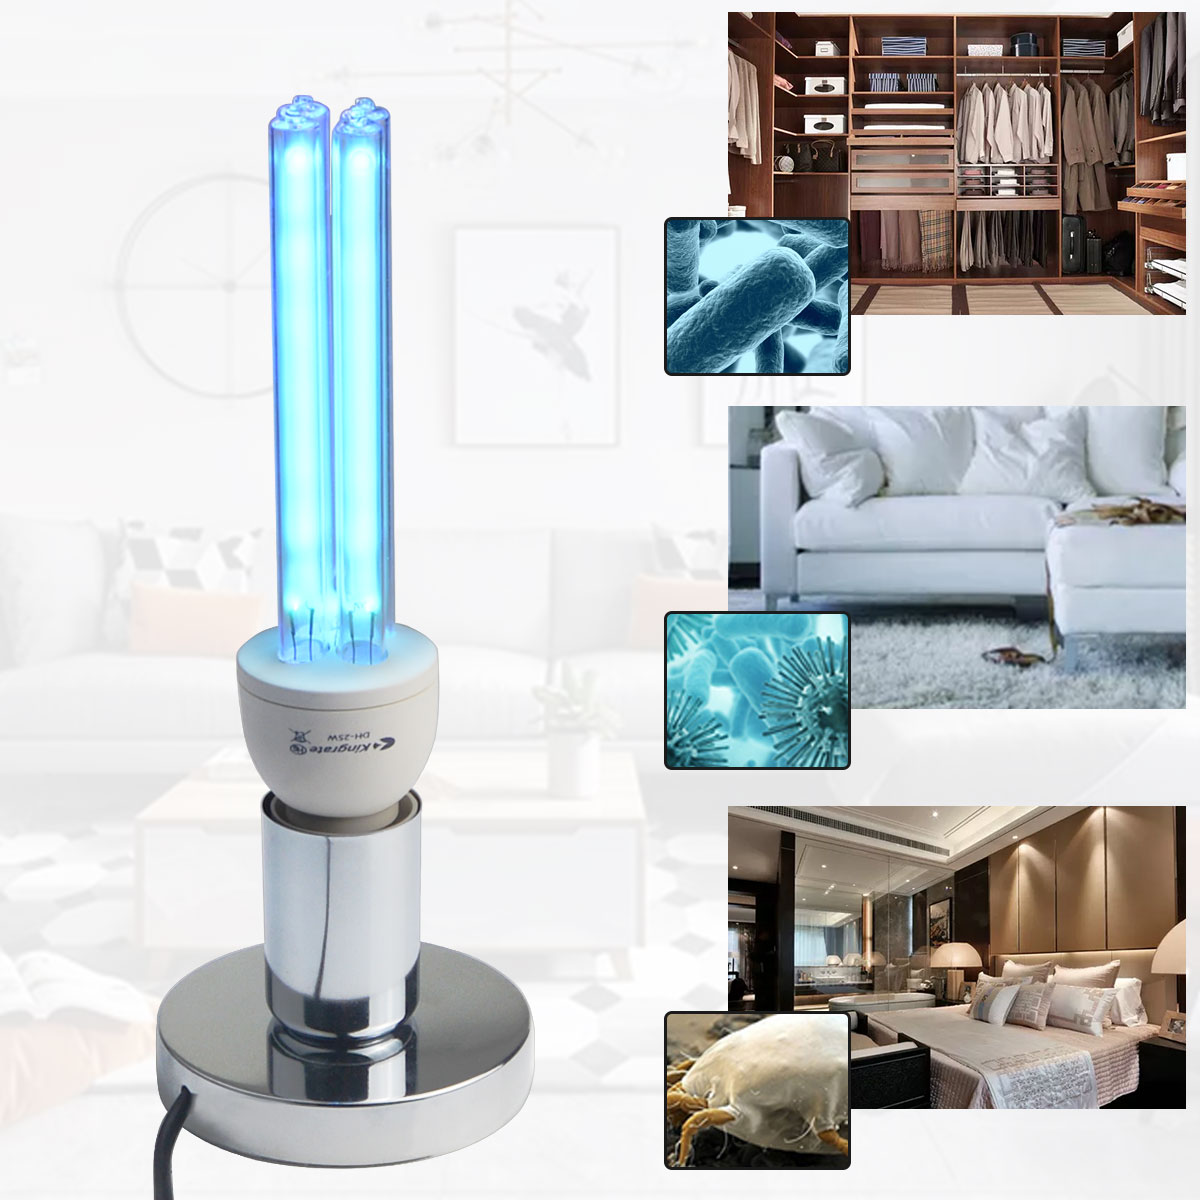 UV Sterilizer Light Ultraviolet UVC Tube Disinfection Ozone Germicidal Lamp Bulb